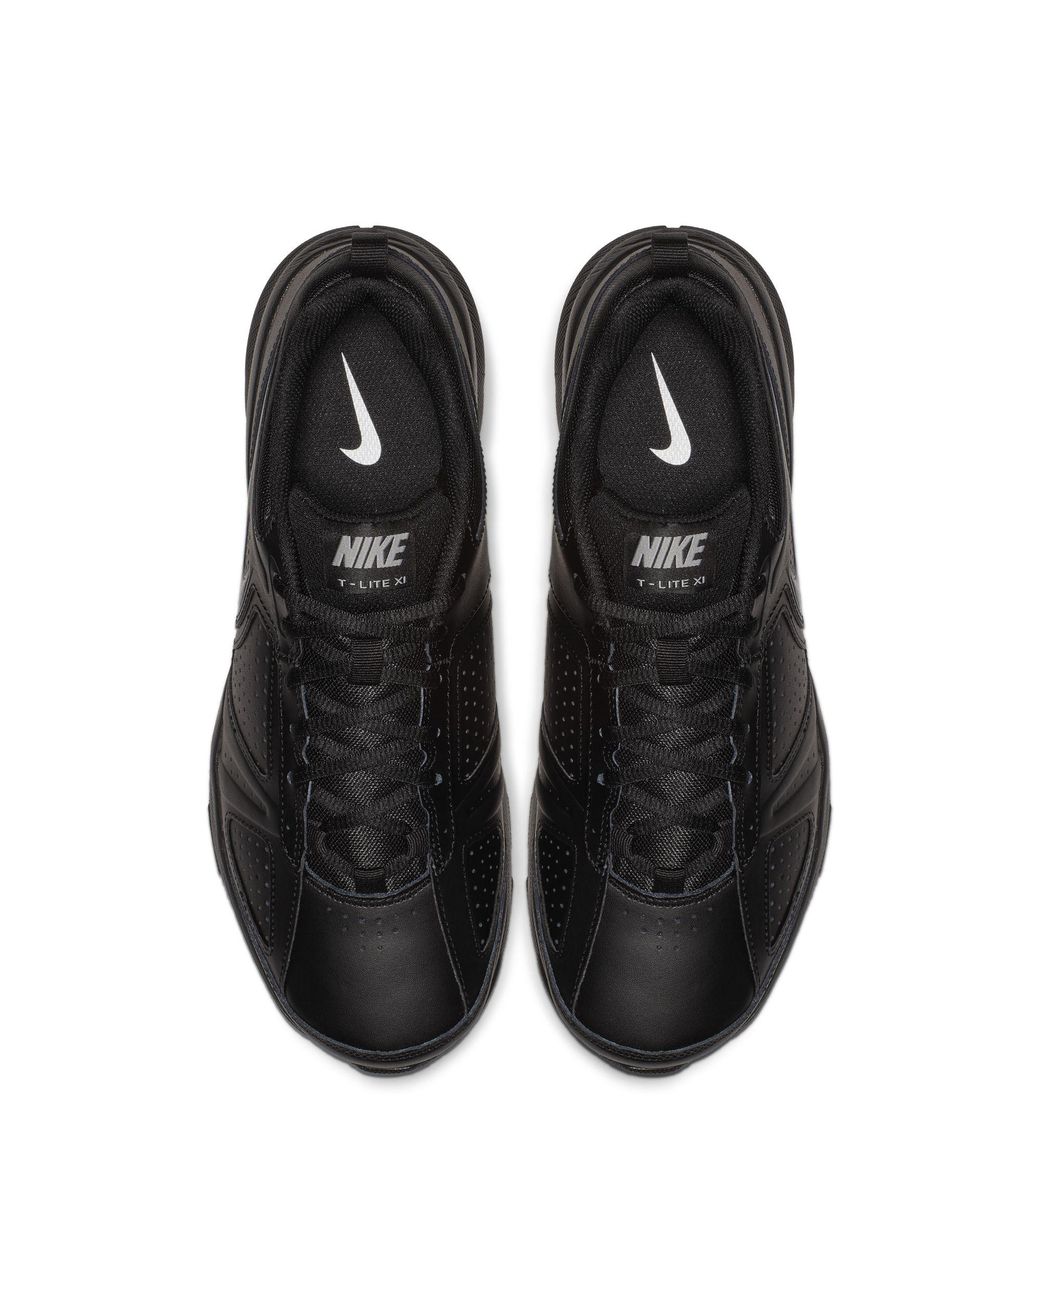 Nike T-lite Xi in White (Black) | Lyst Australia